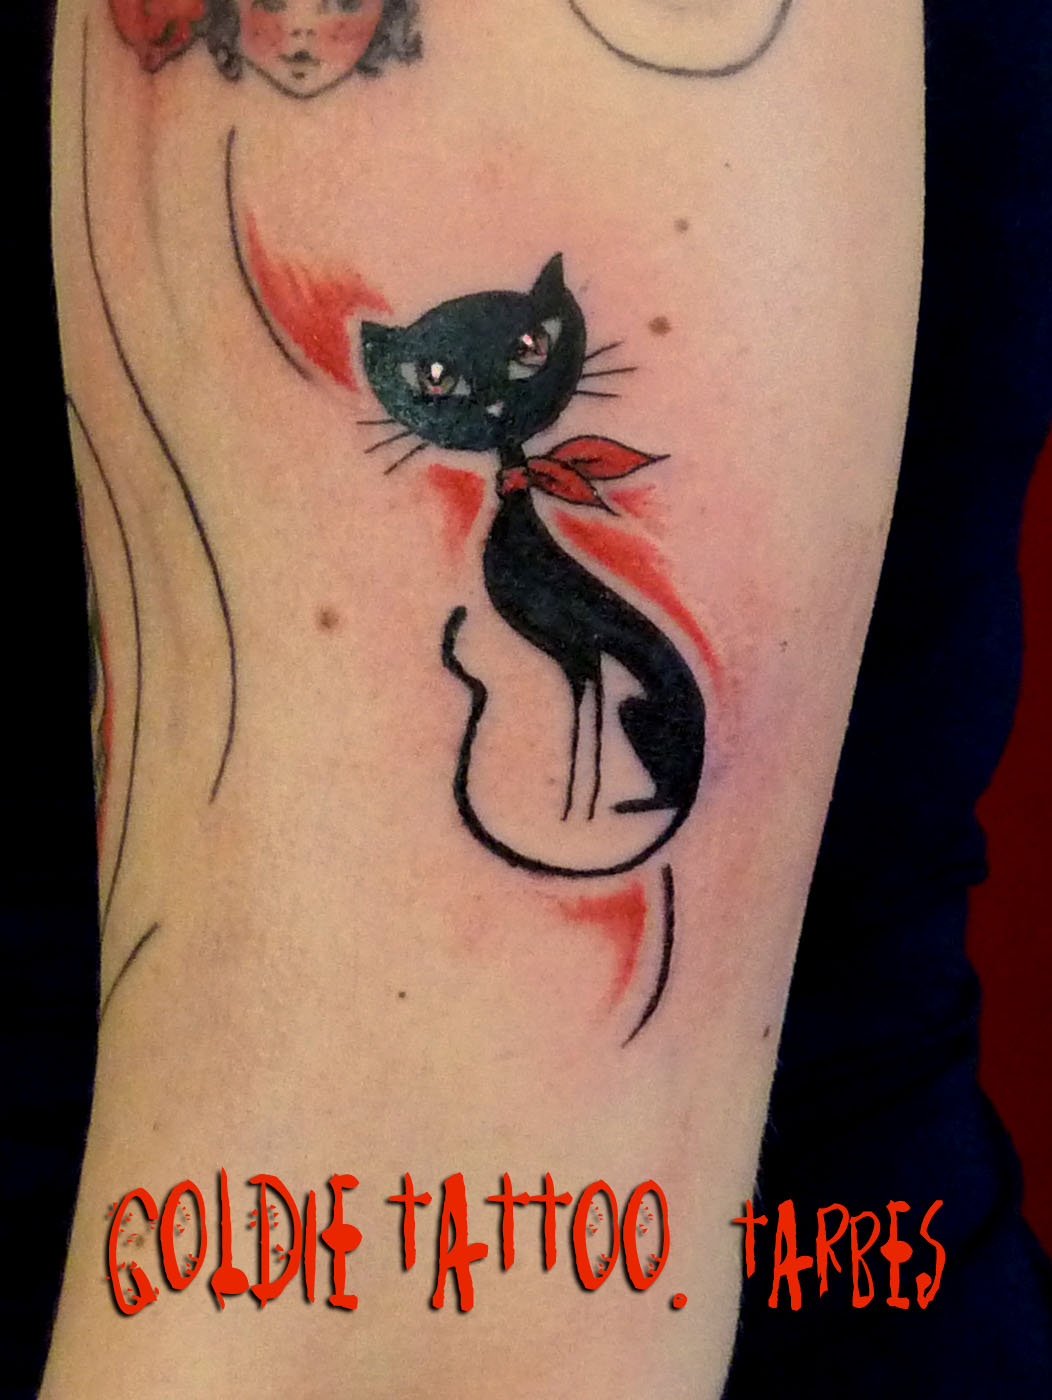 goldie-tattoo-tarbes-oct_-2013-chat-jolie-mome.jpg